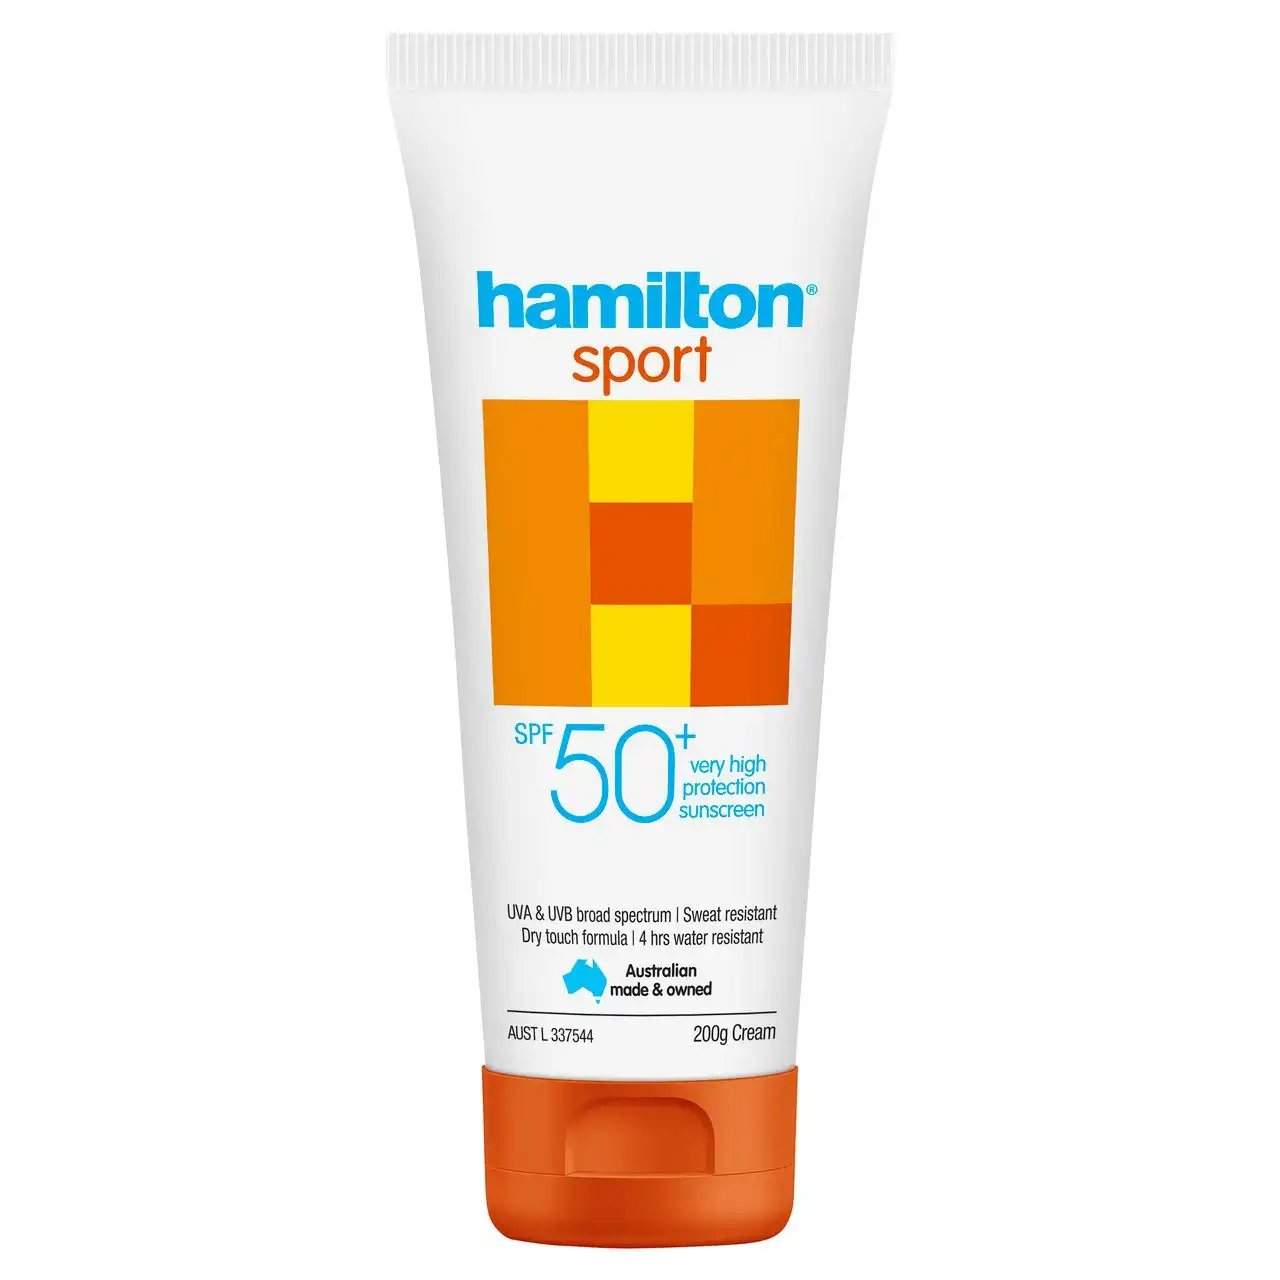 Hamilton Sport SPF 50+ 200g